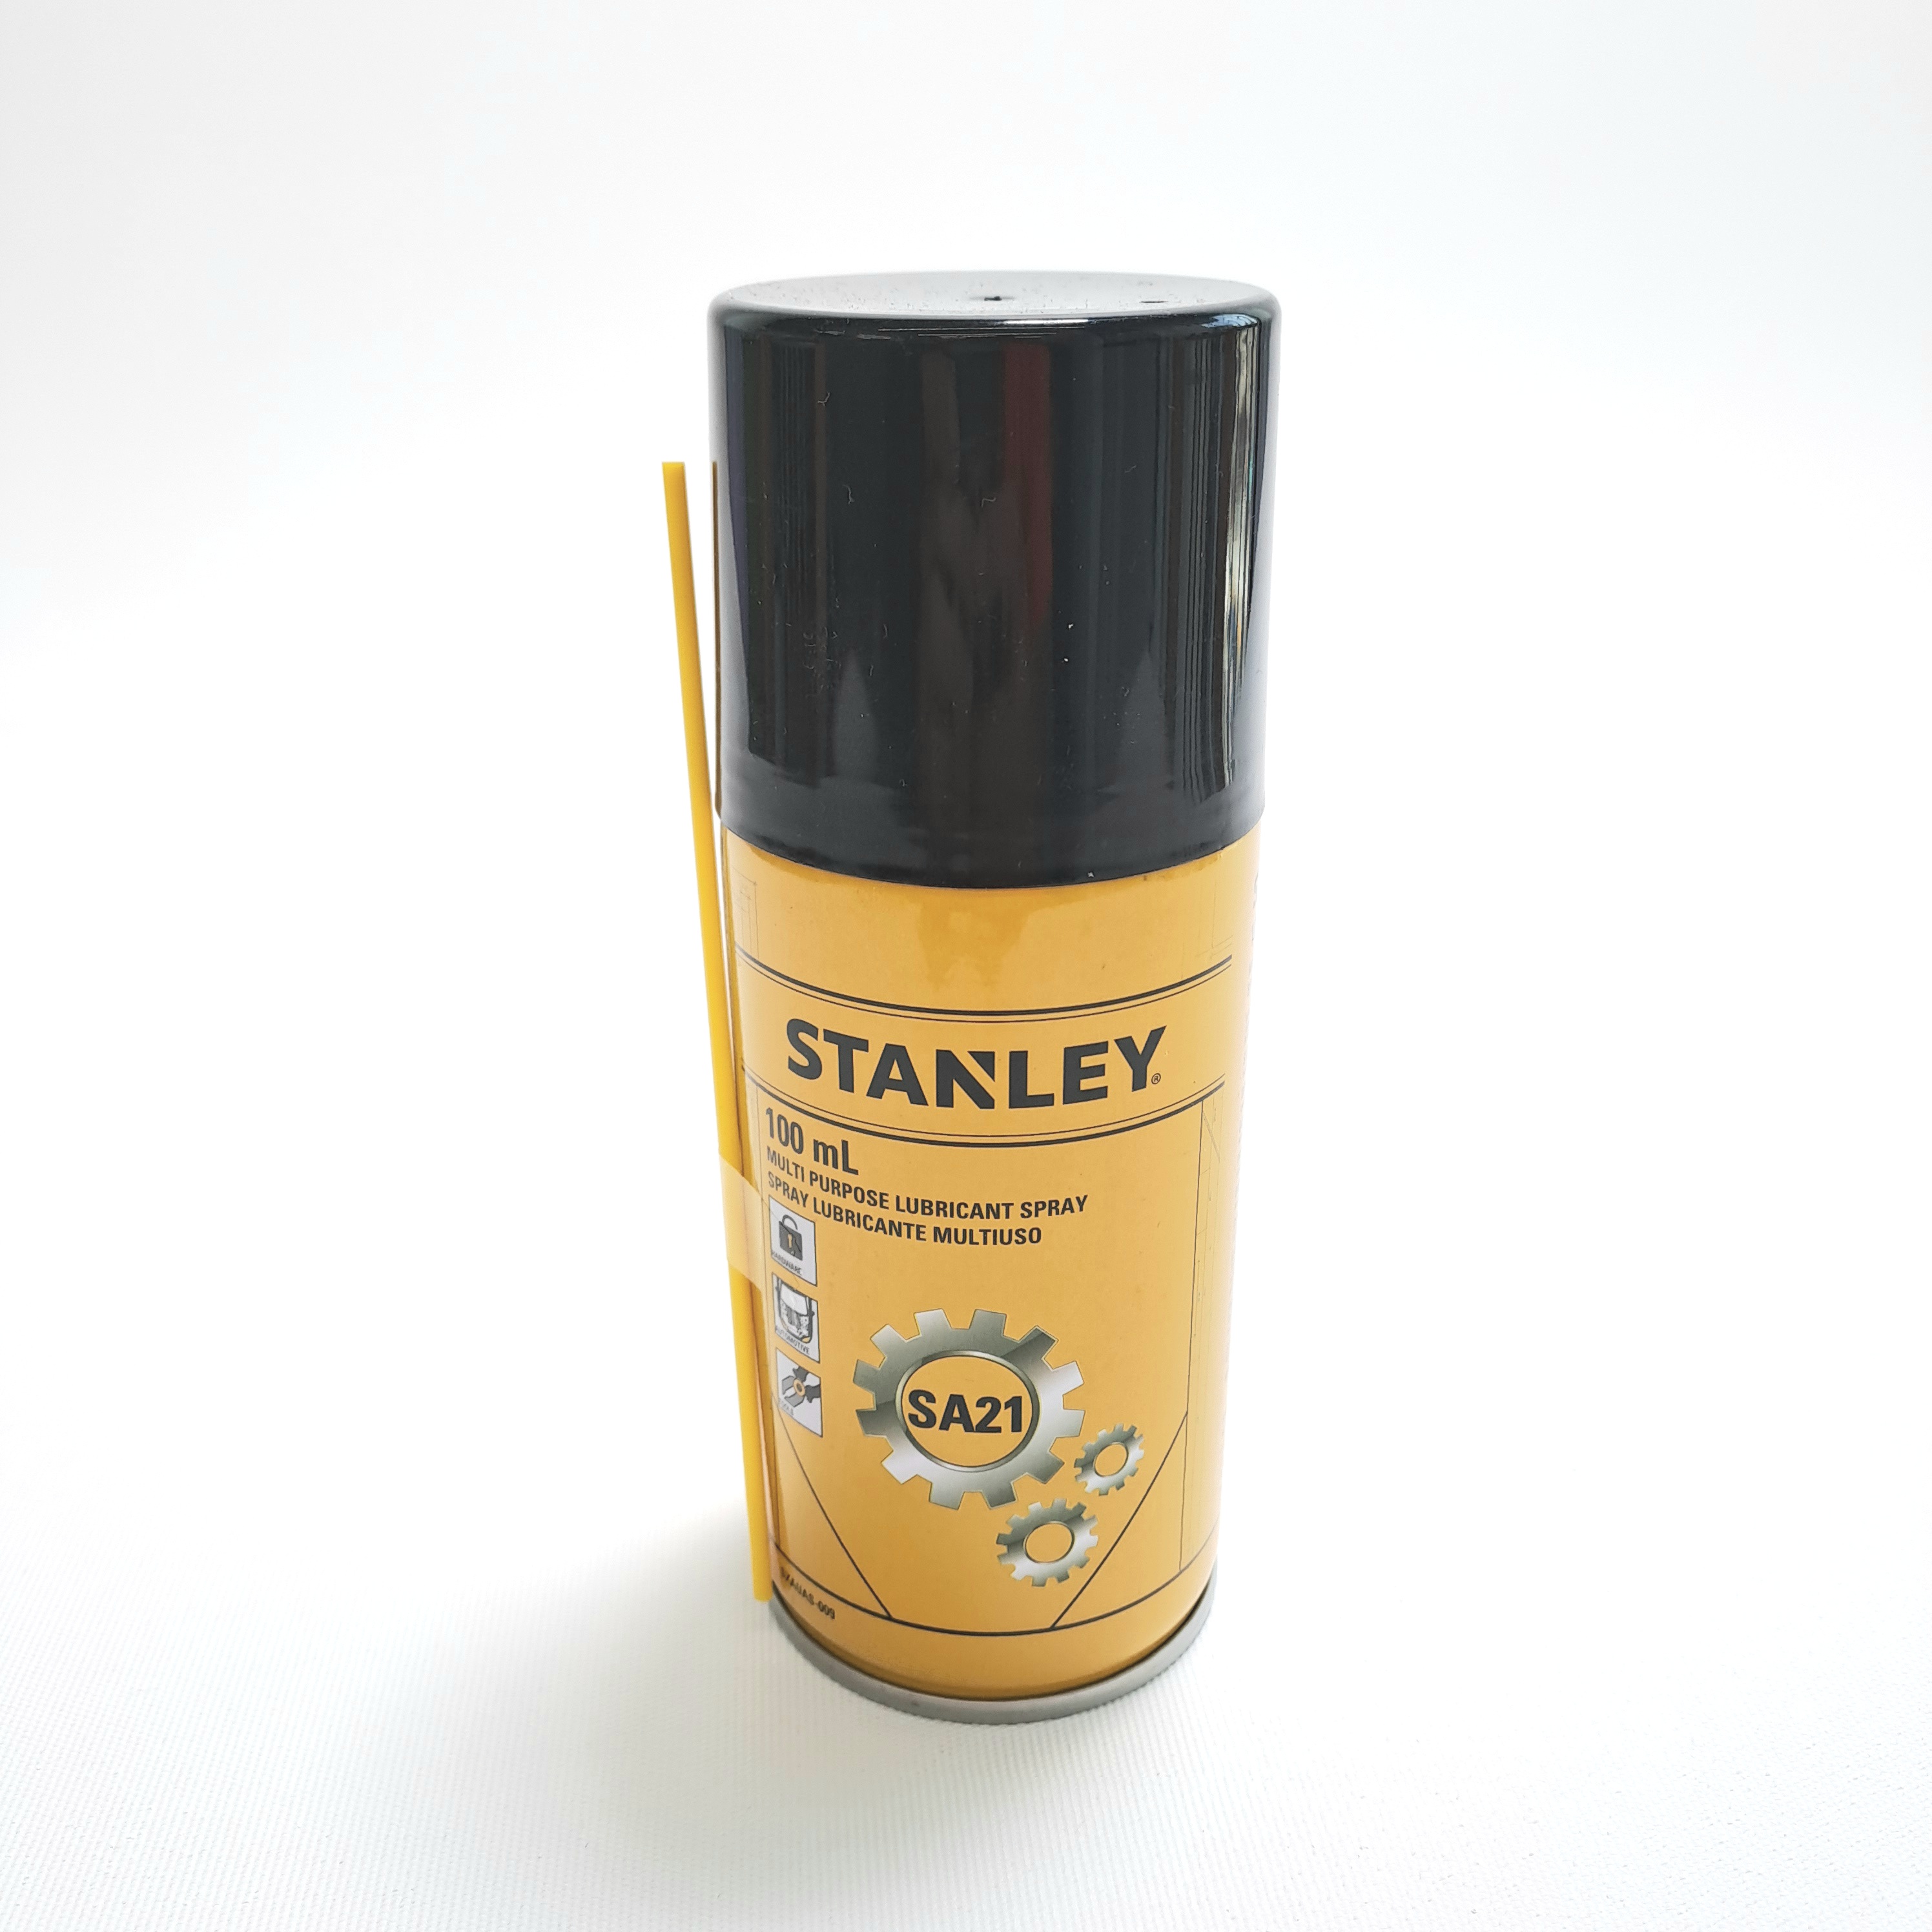 Stanley multi purpose lubricant spray 100ml (72896)